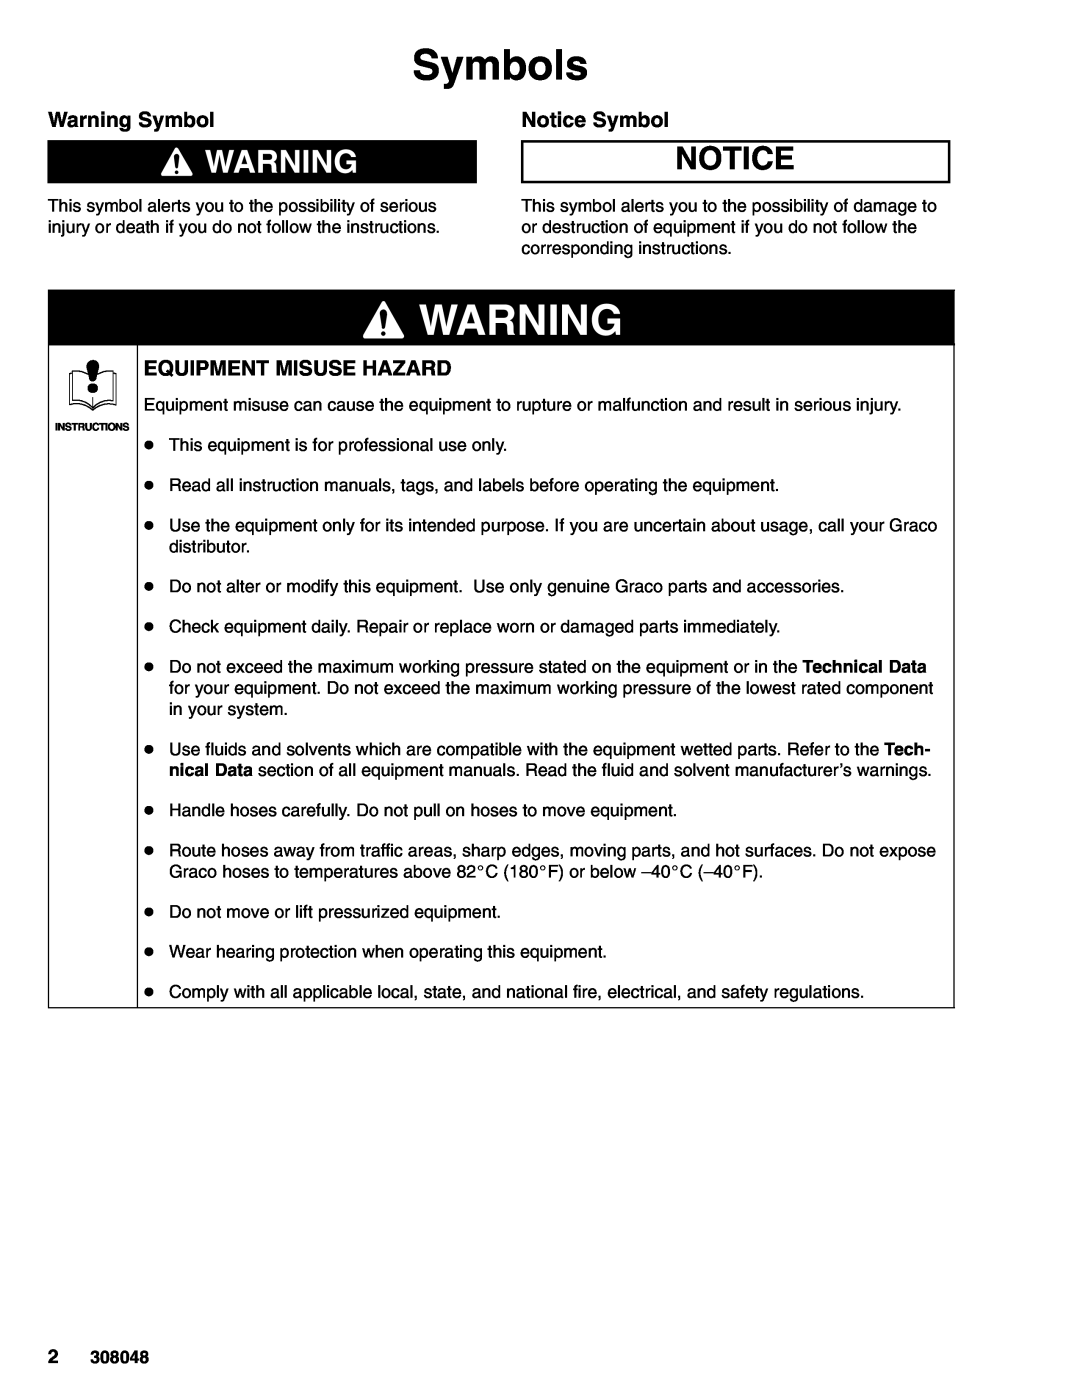 Graco 223646 important safety instructions Symbols, Warning Symbol, Notice Symbol, Equipment Misuse Hazard 